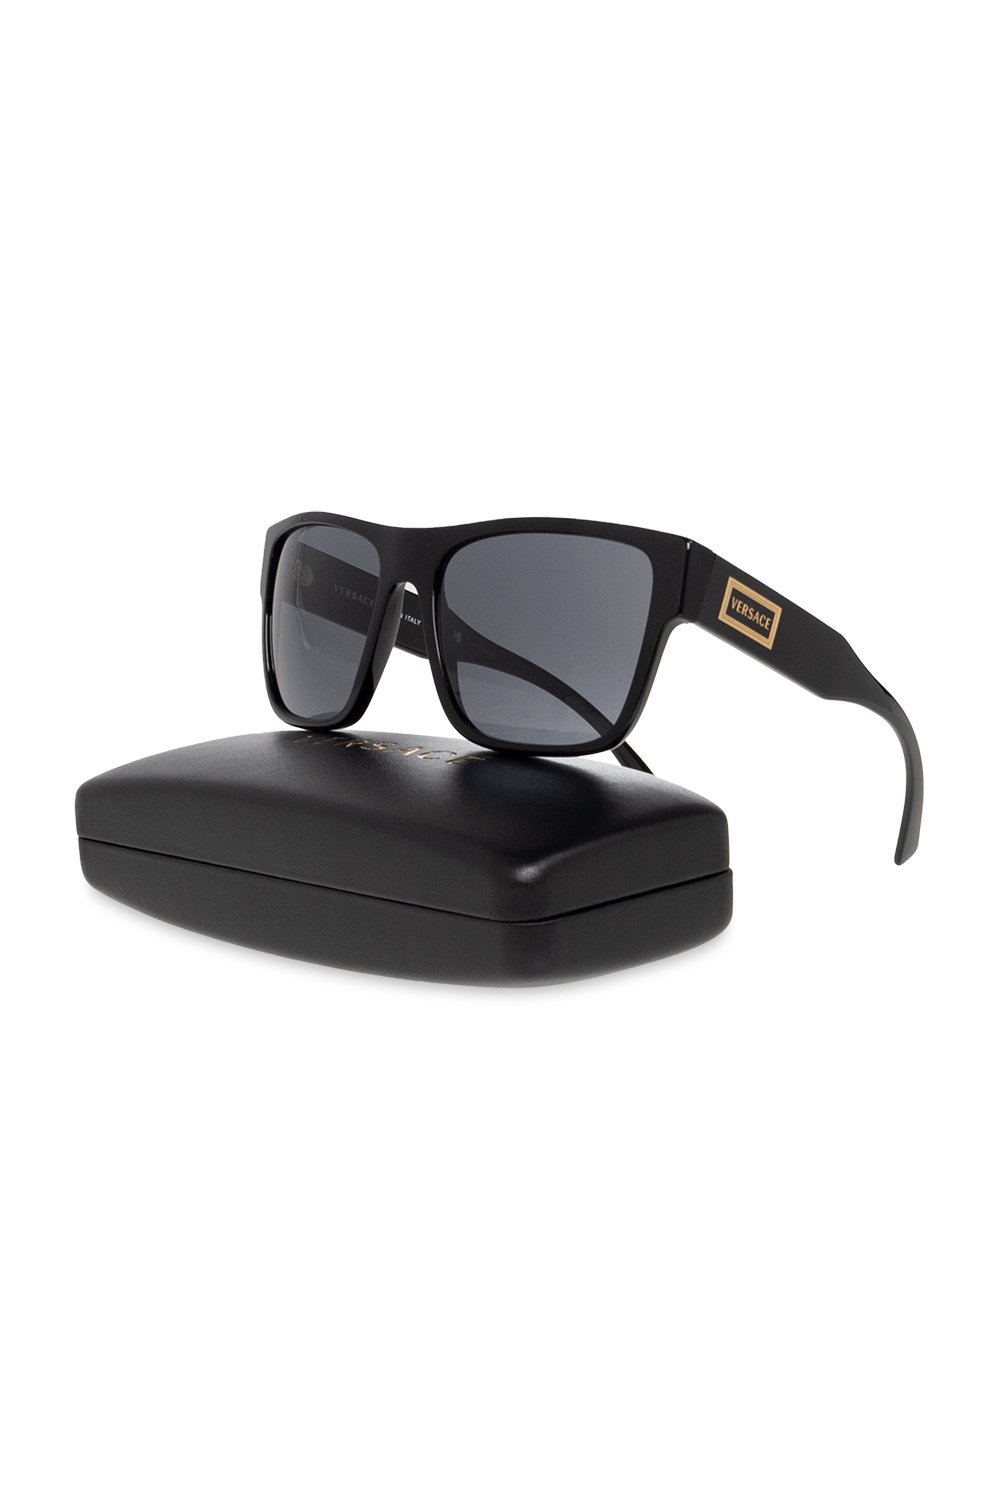 Versace Dolce & Gabbana Eyewear Sunglasses for Women